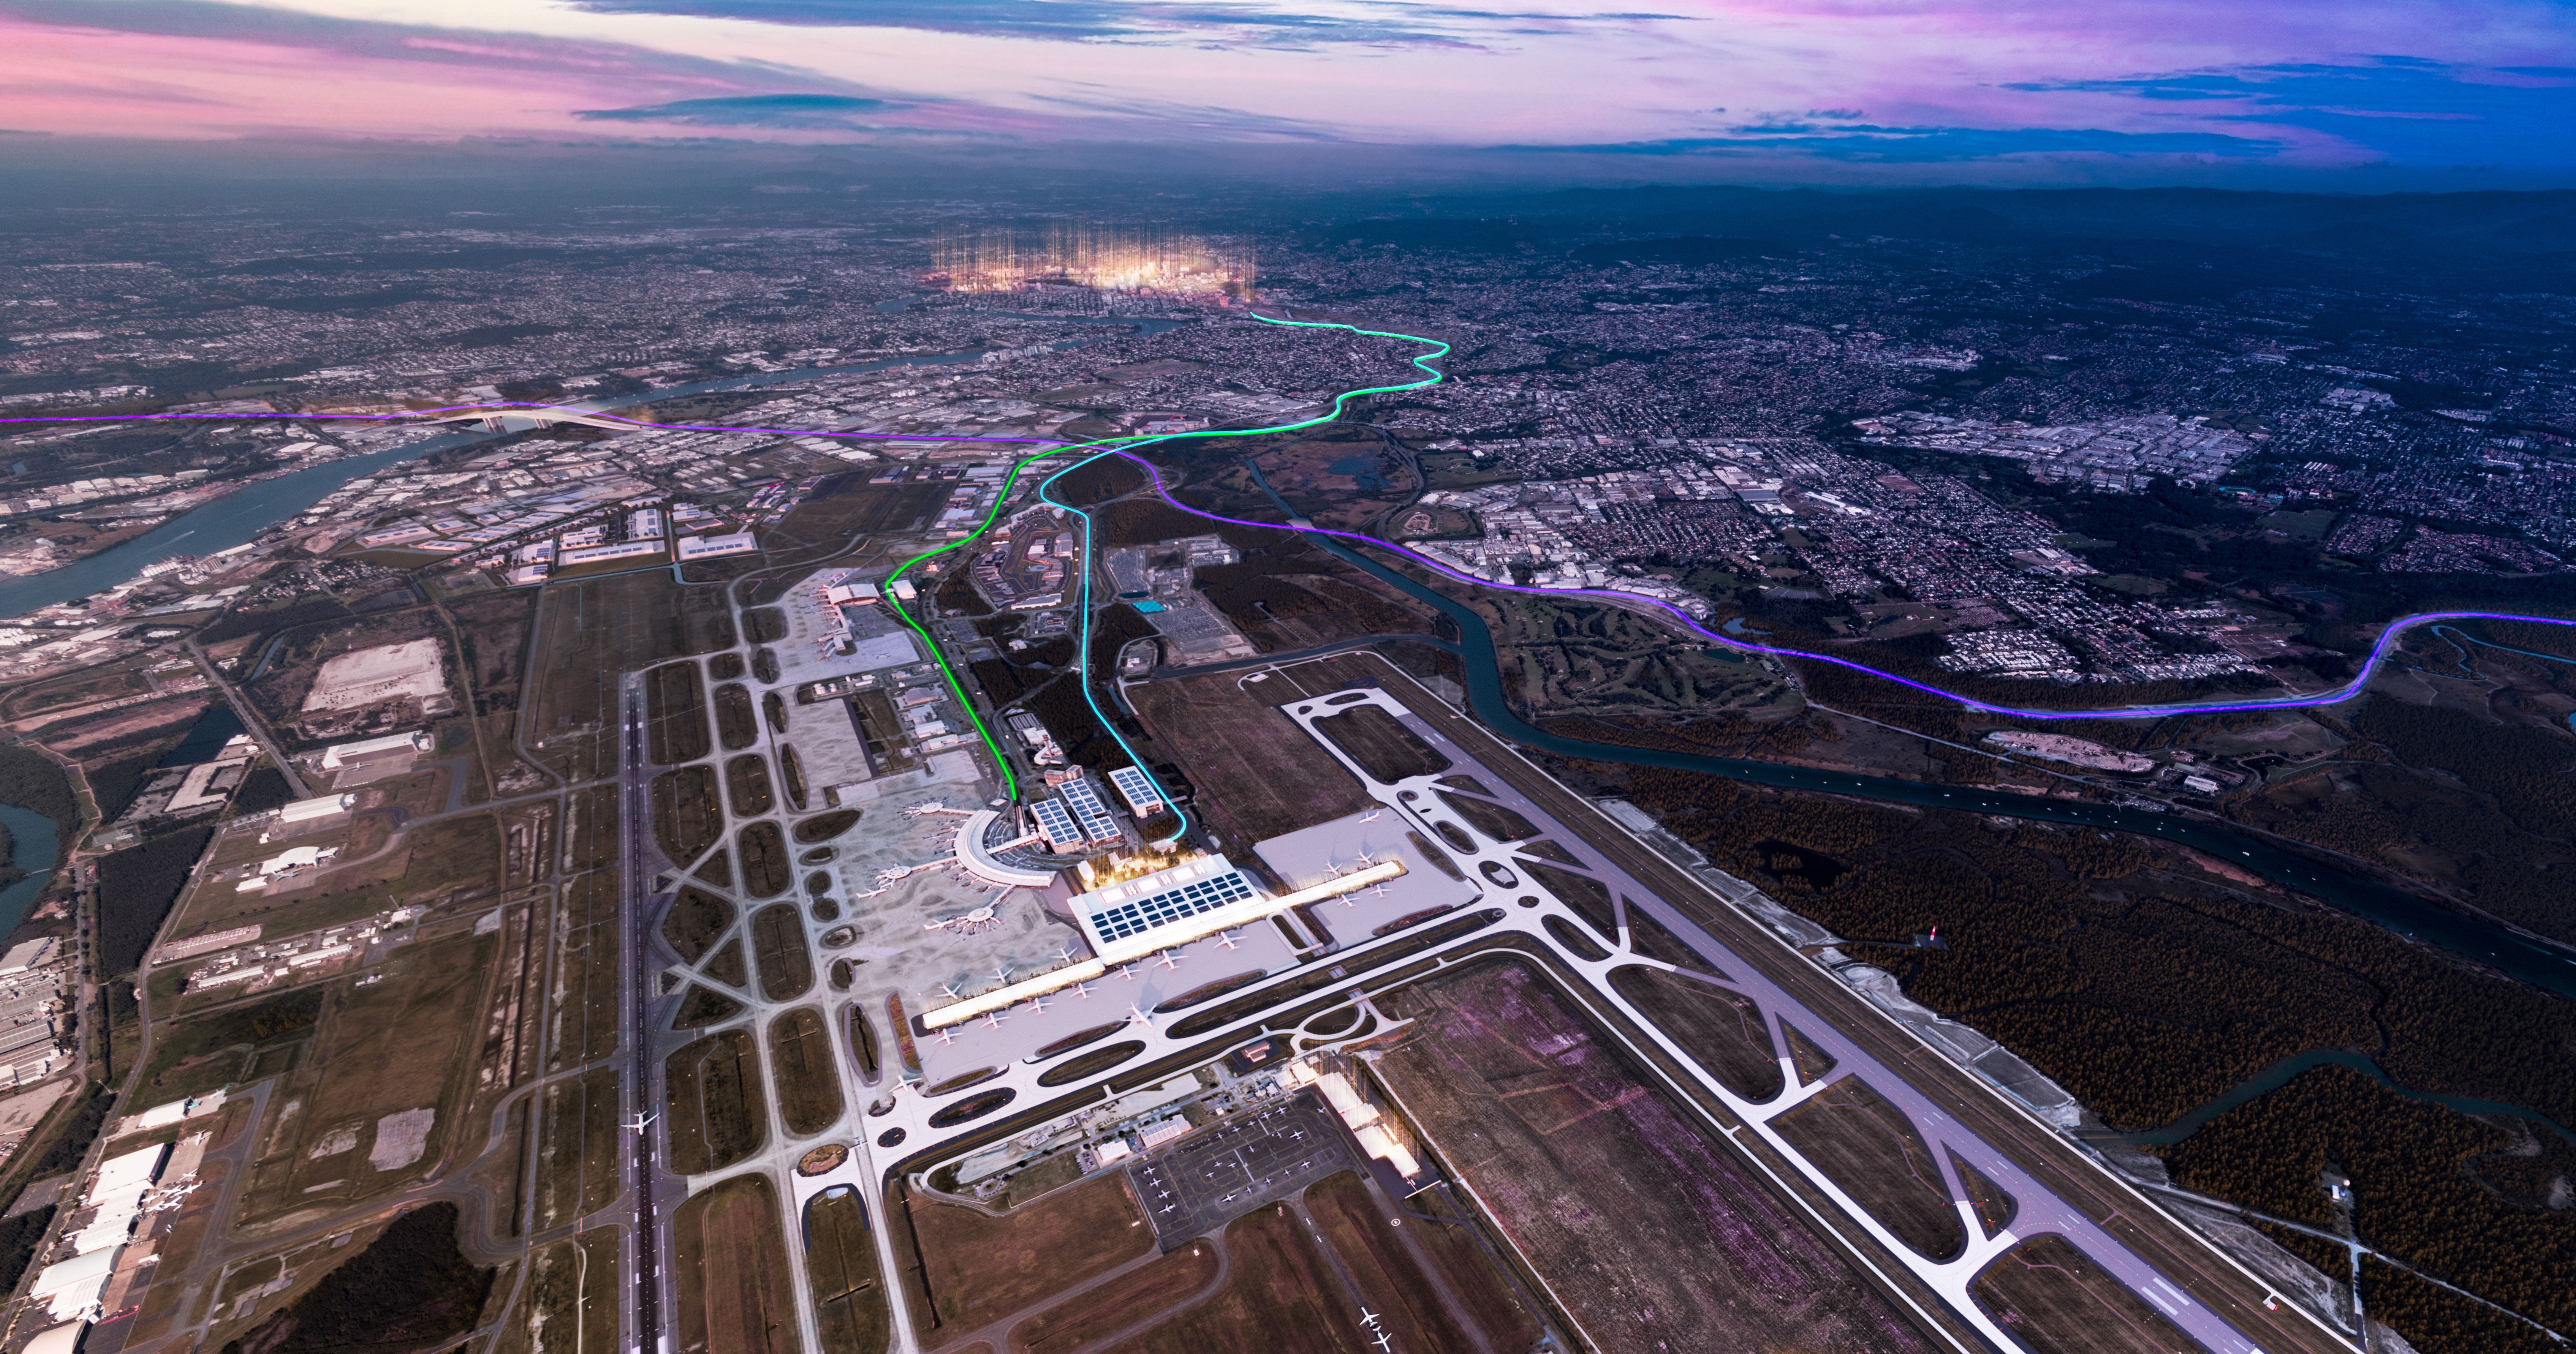 Brisbane Airport Terminal 3 is poised to be inbetween the two runways